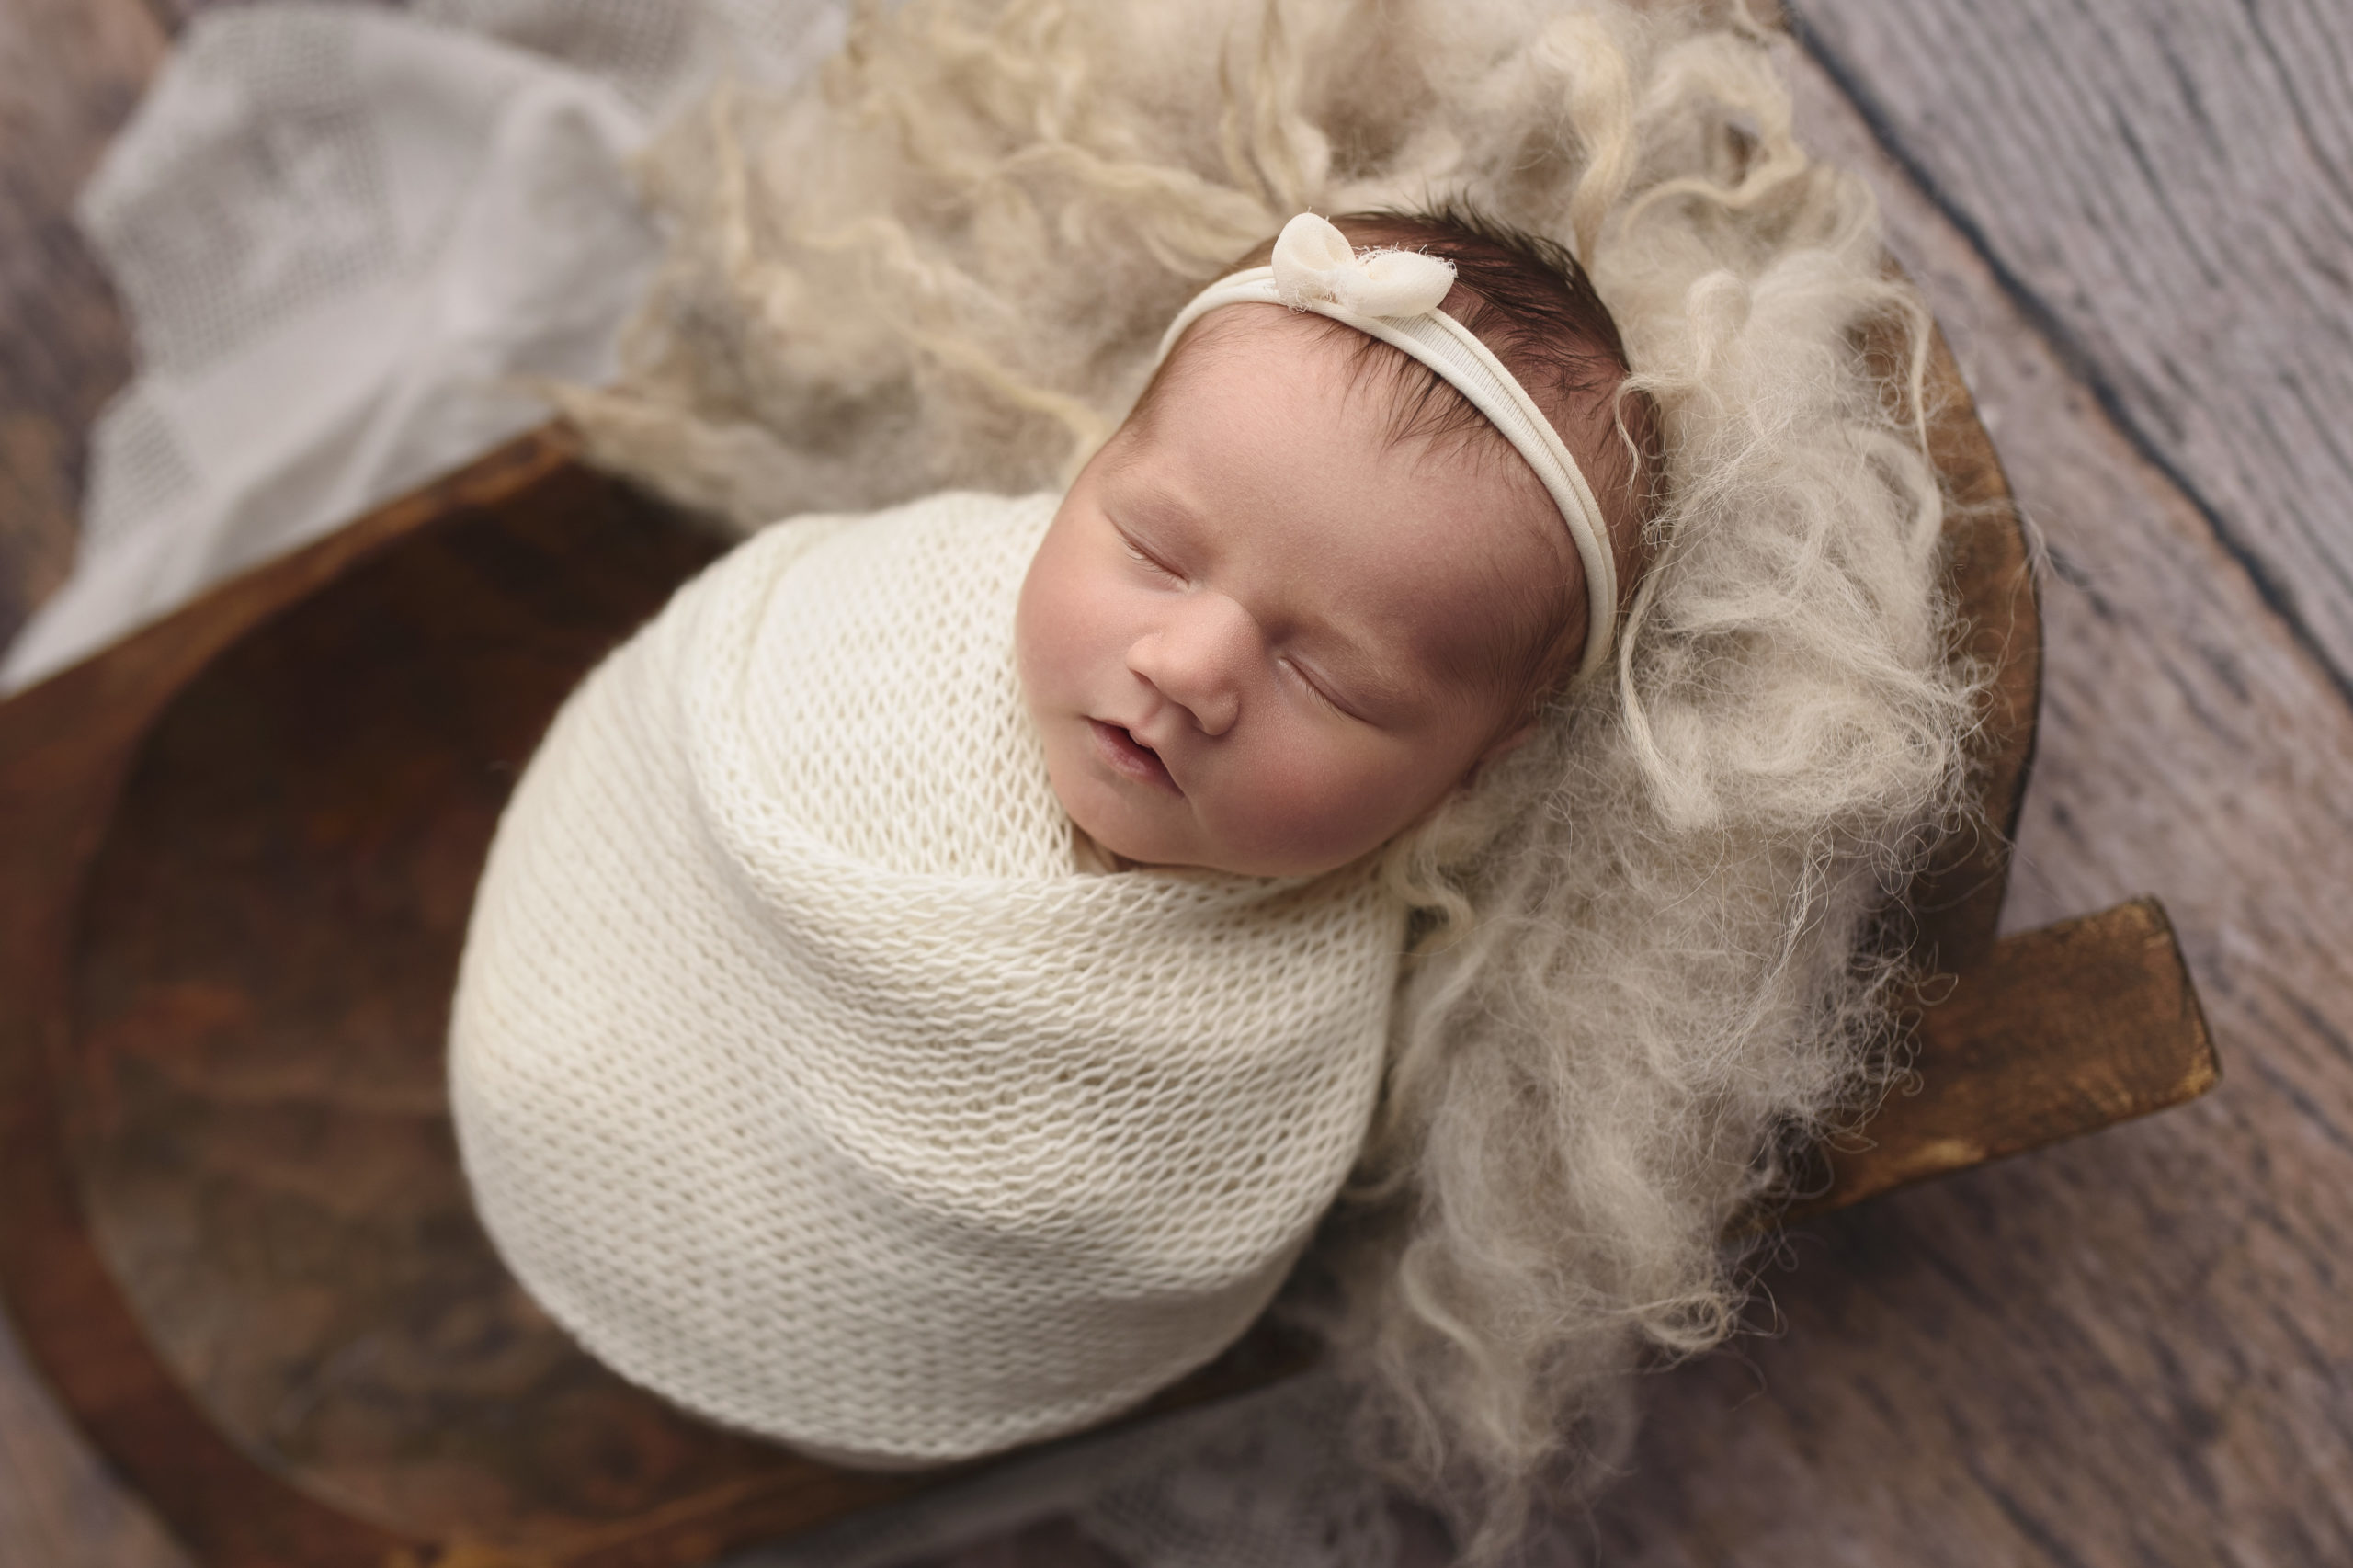 grand rapids mi newborn photography studio shoot baby sleeping in a knit wrap